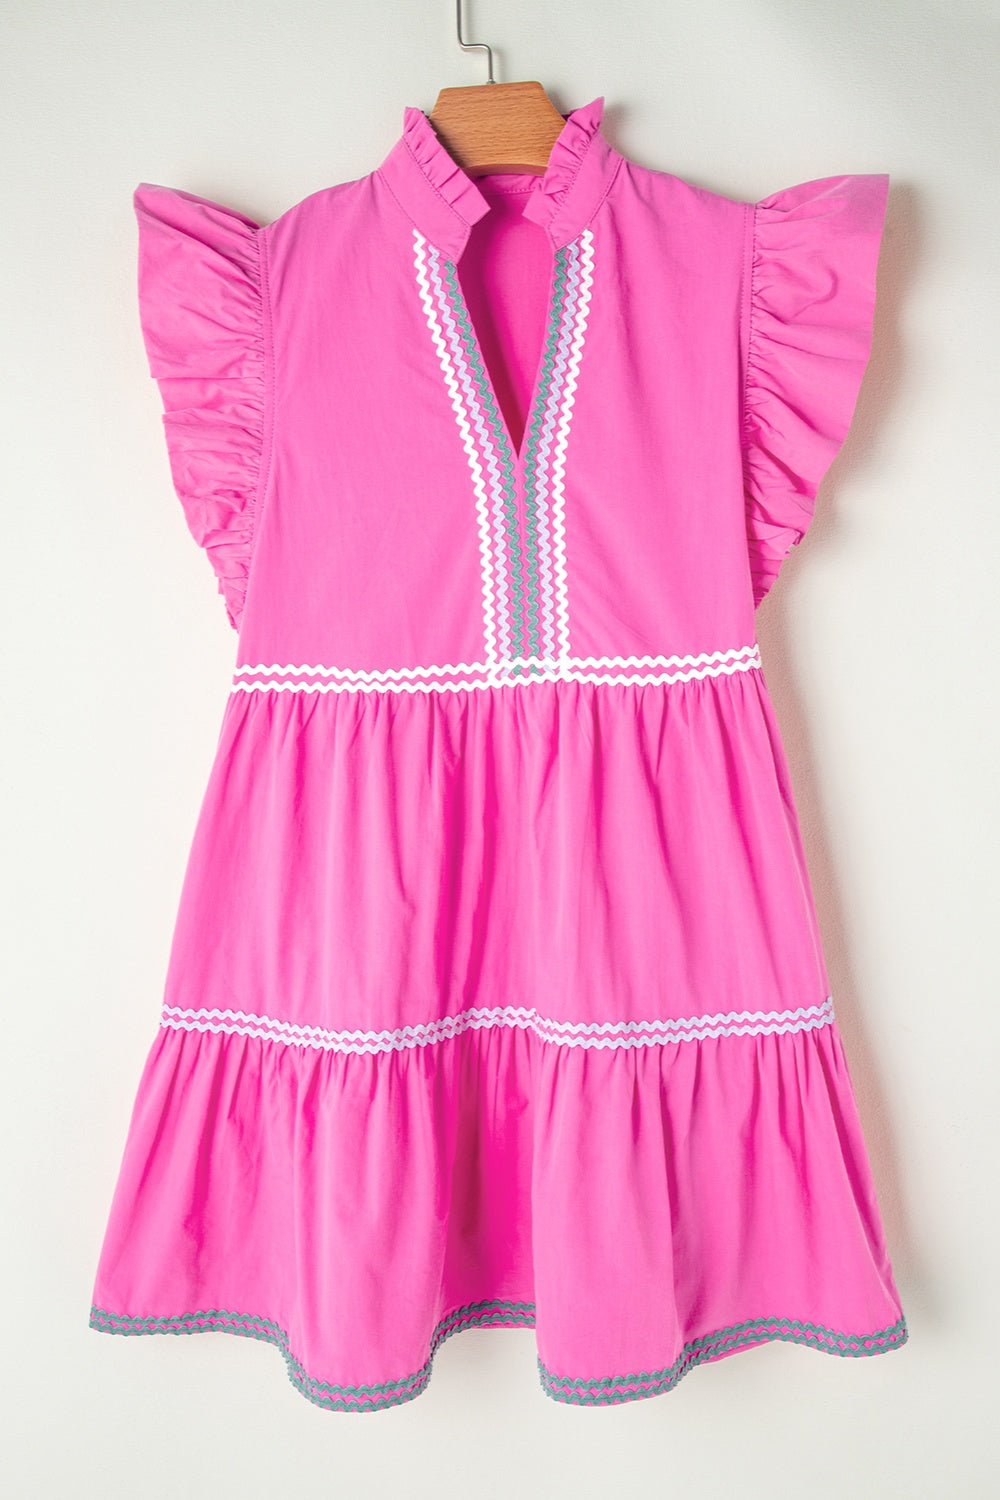 Ruffled Notched Cap Sleeve Mini Dress Sunset and Swim Fuchsia Pink S 